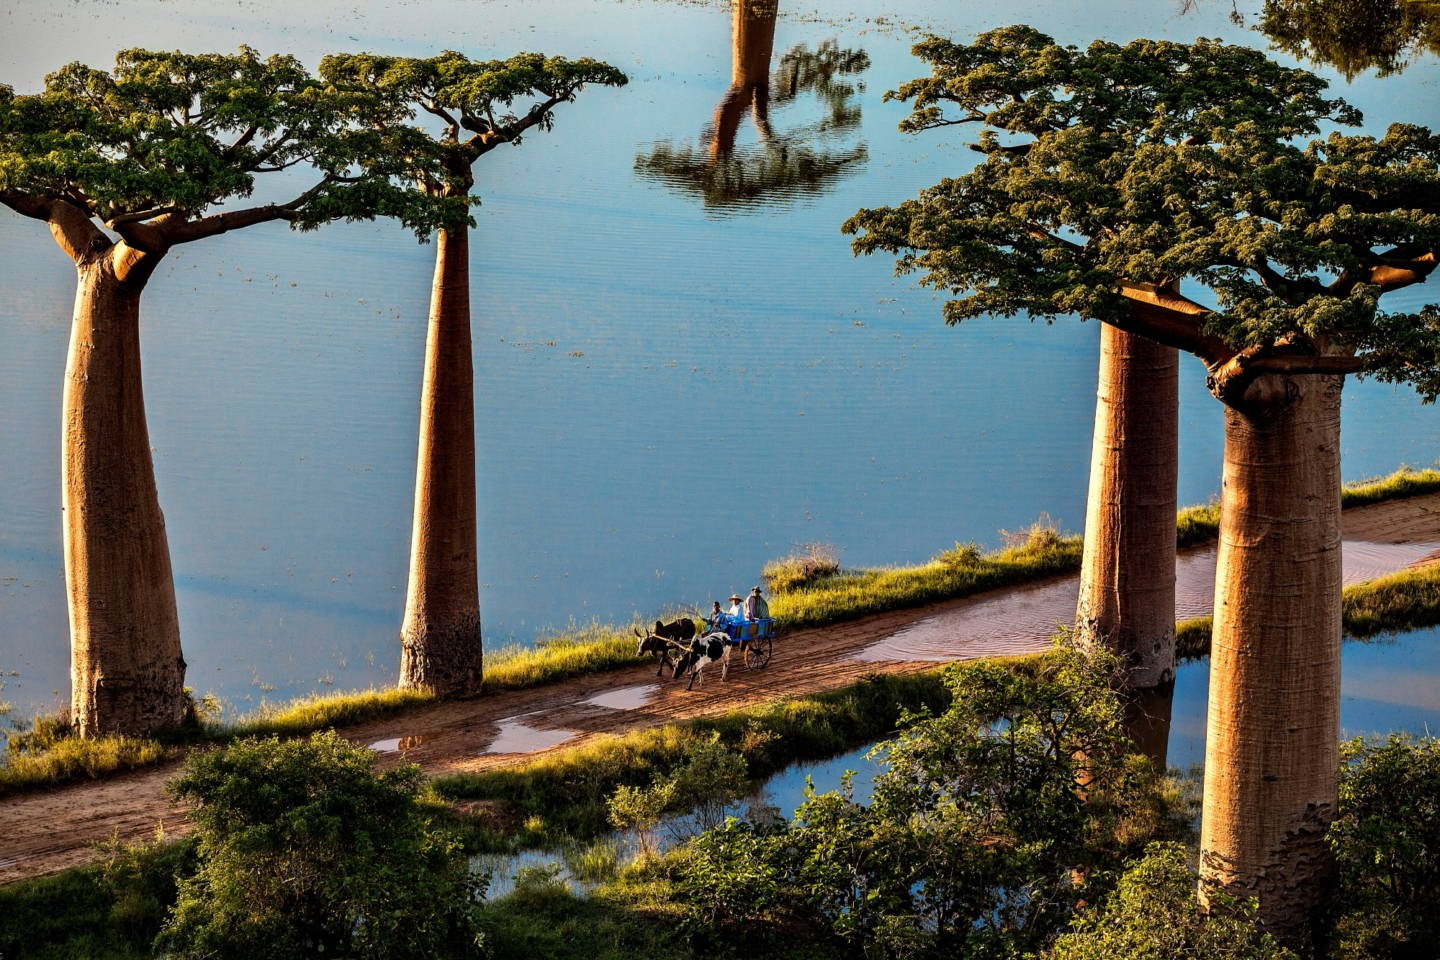 Аллея баобабов. Морондава, Менабе, Мадагаскар. Фотограф Паскаль Мэтр